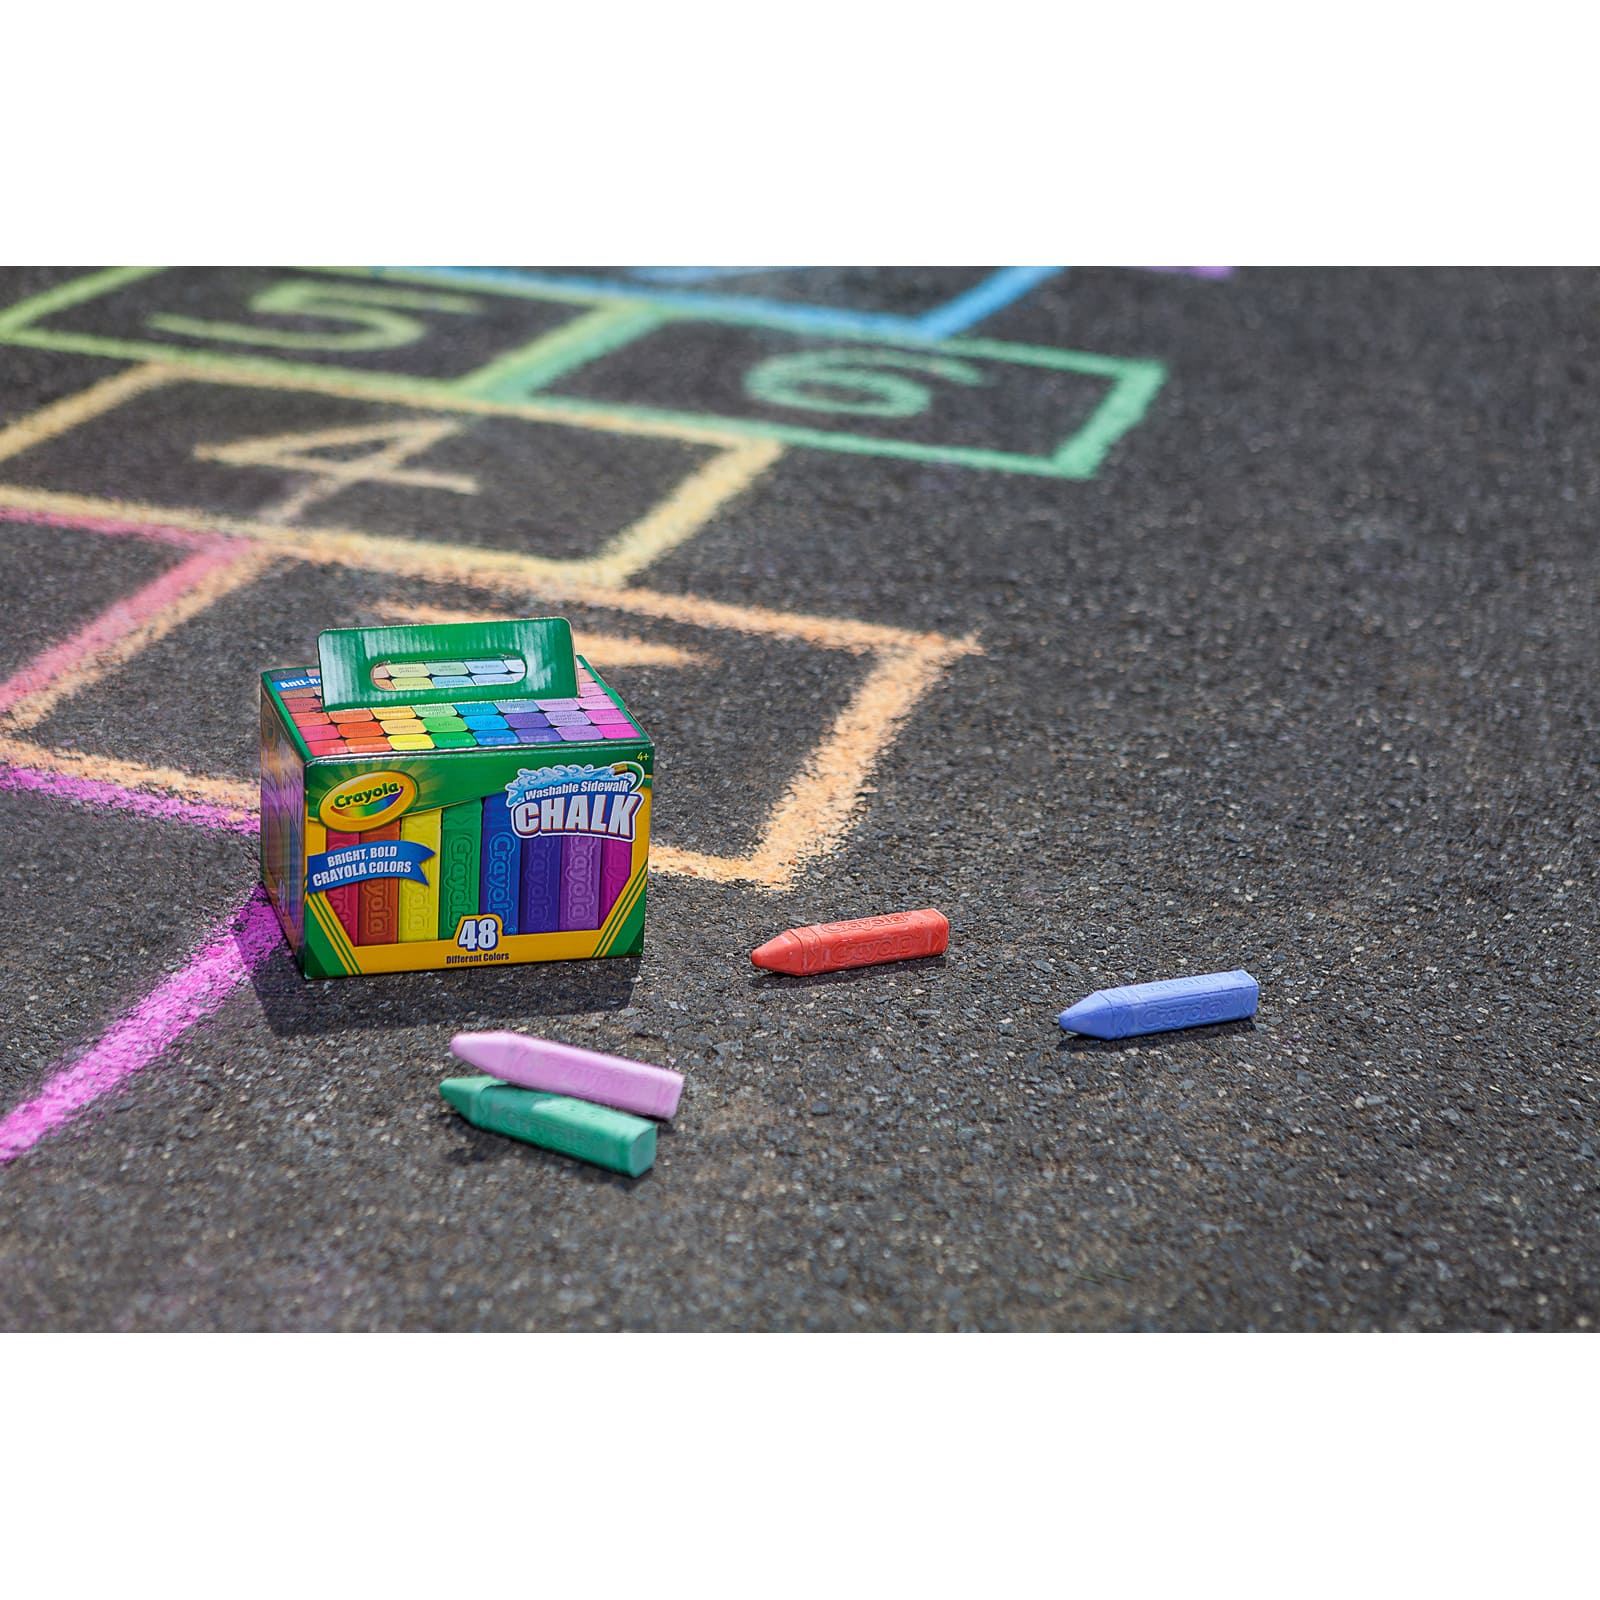 12 Packs: 48 ct. (576 total) Crayola Washable Sidewalk Chalk